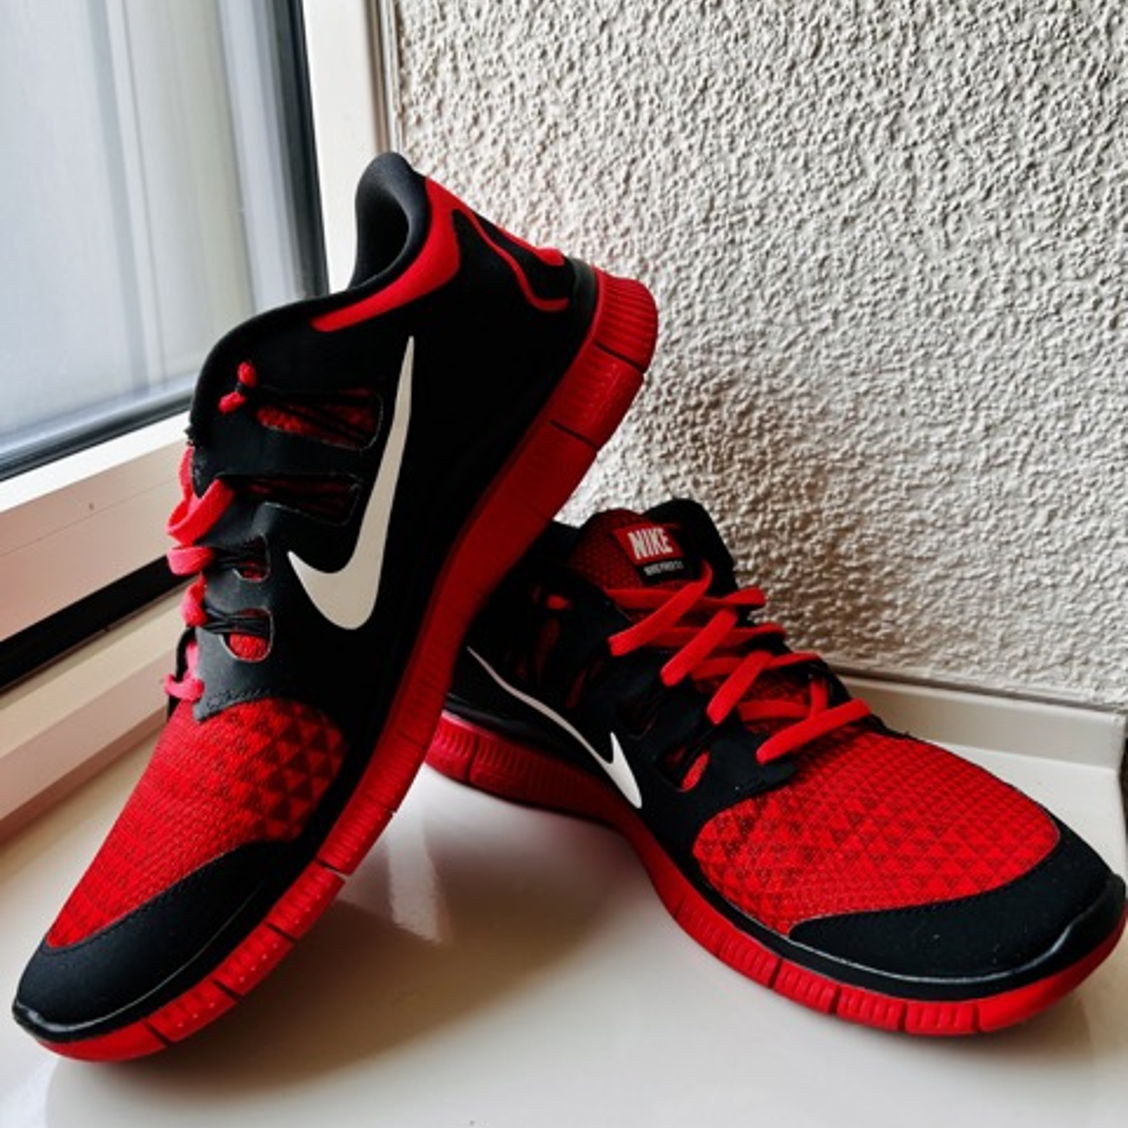 Nike Free 5.0, rot, kaum getragen